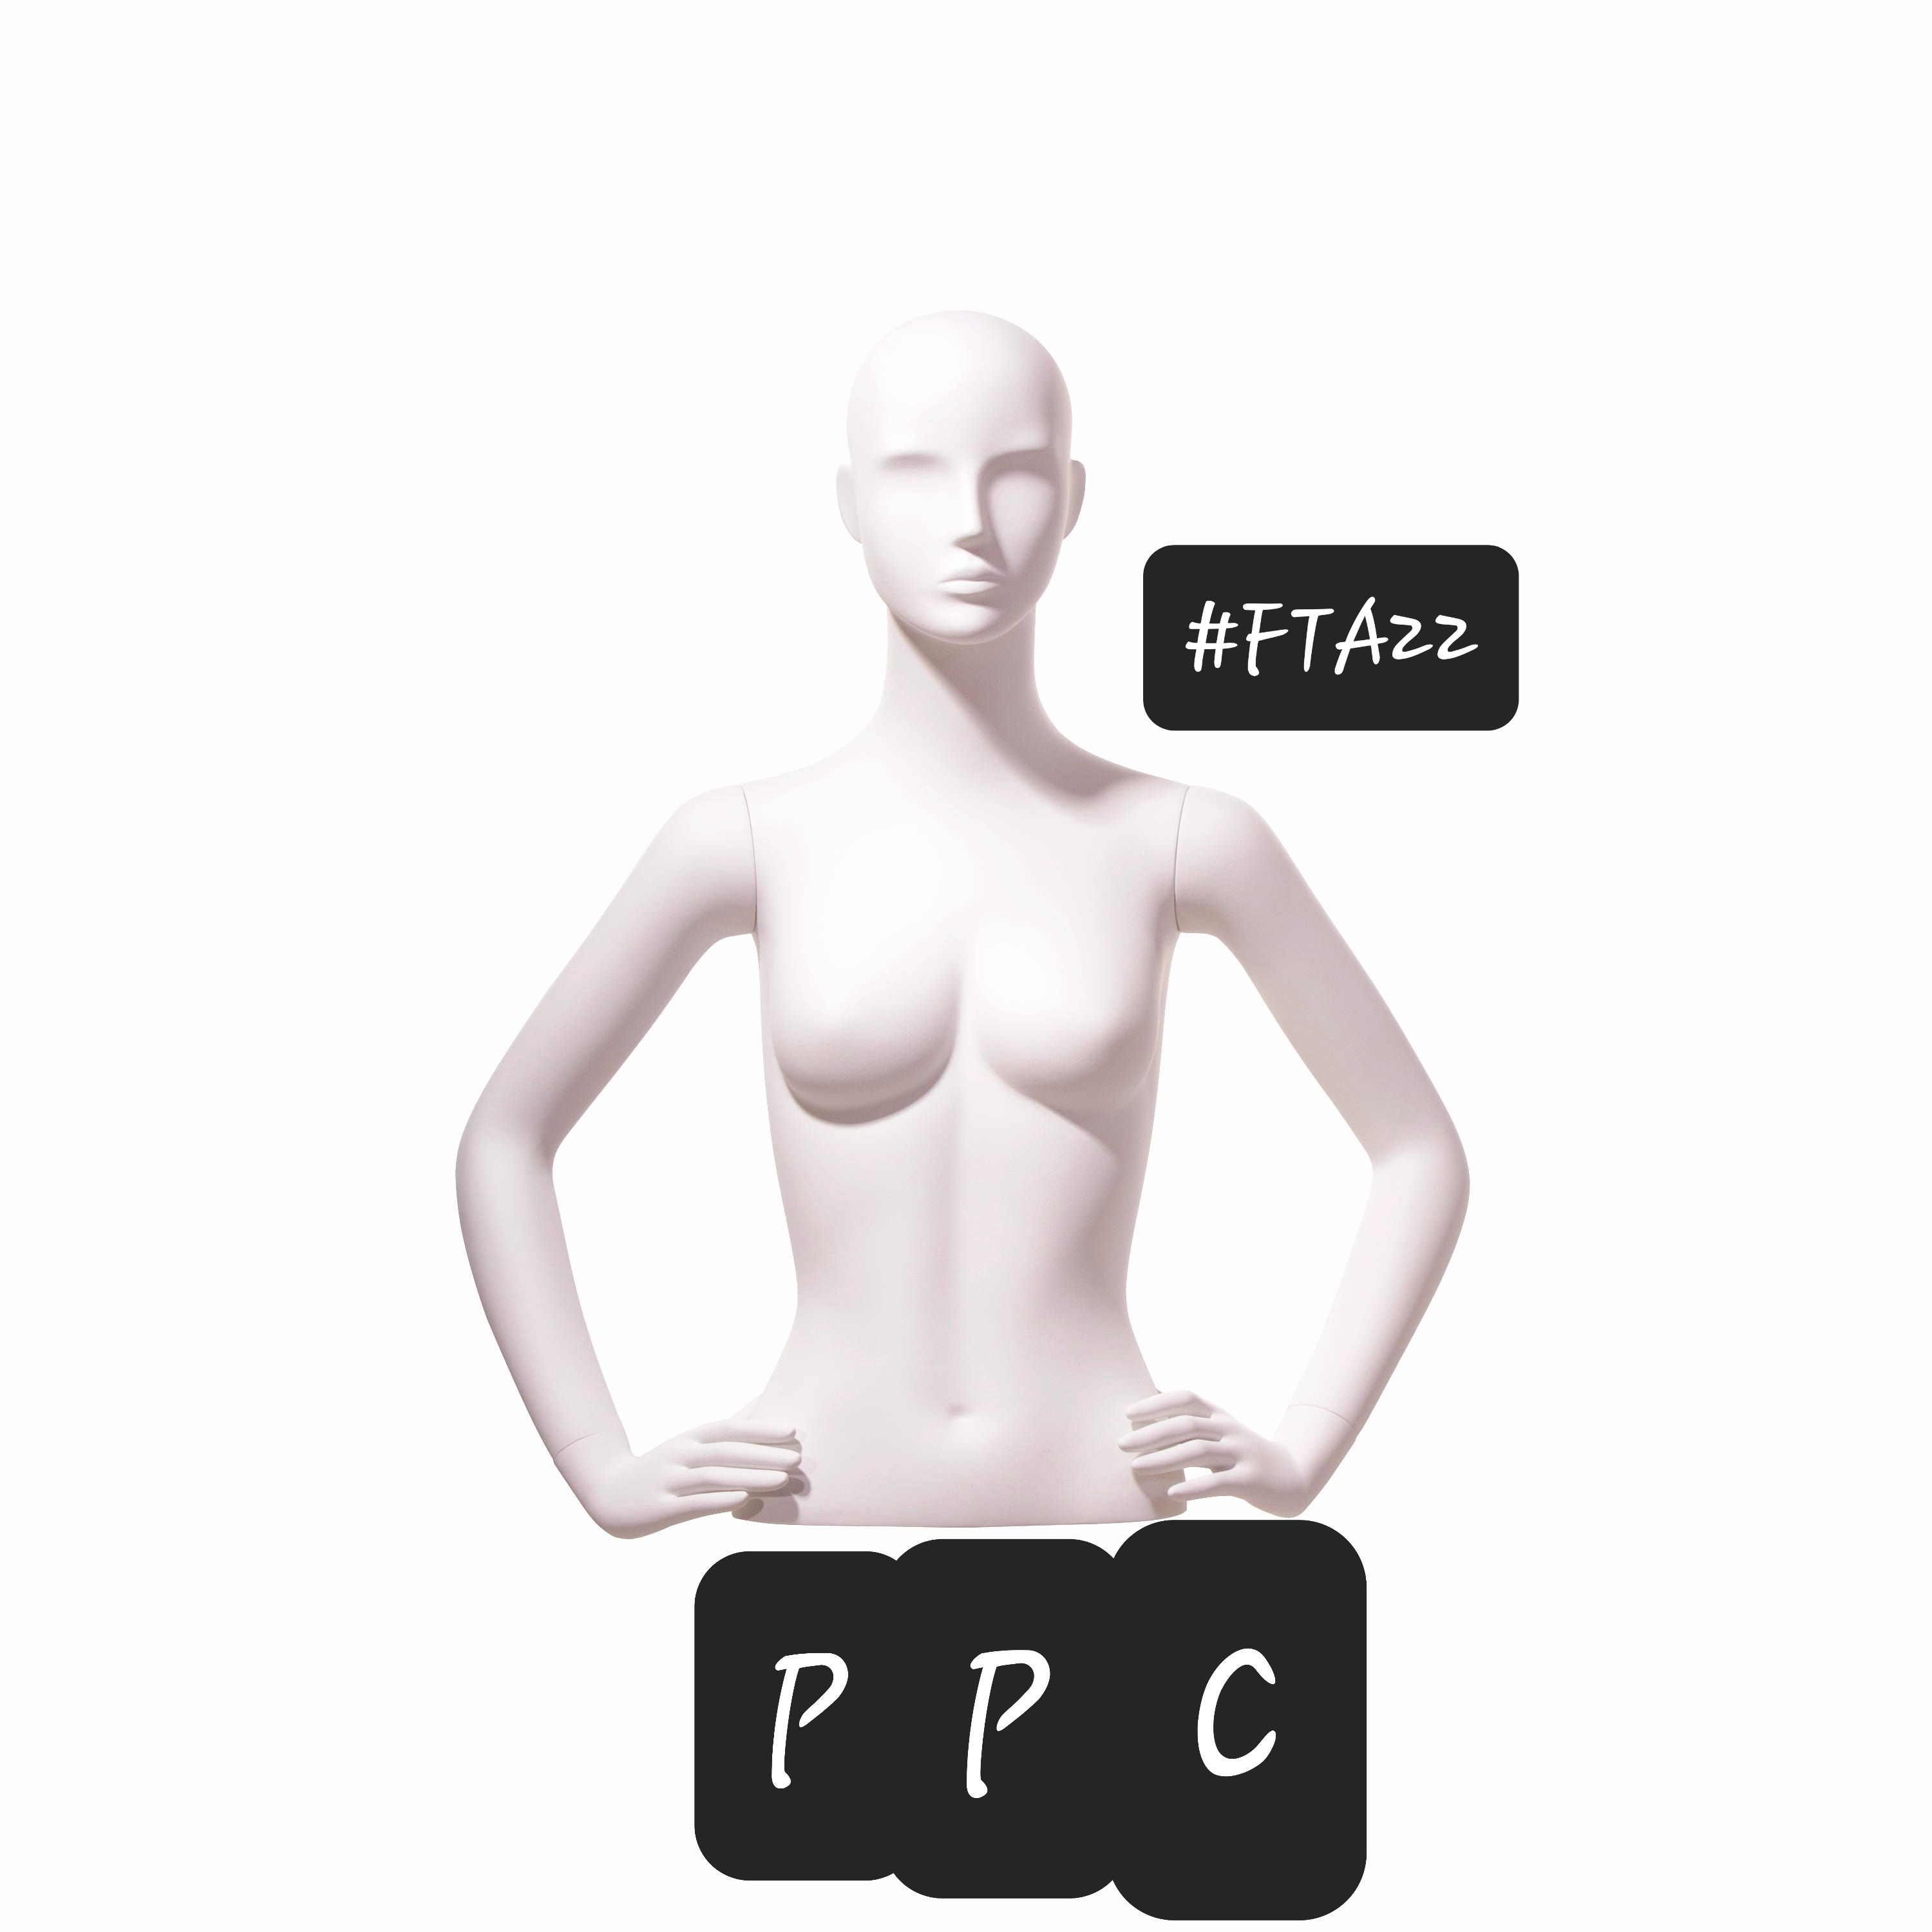 PPC #FTA22 FEMALE FIBERGLASS TORSO WITH ARMS ON THE SIDE 